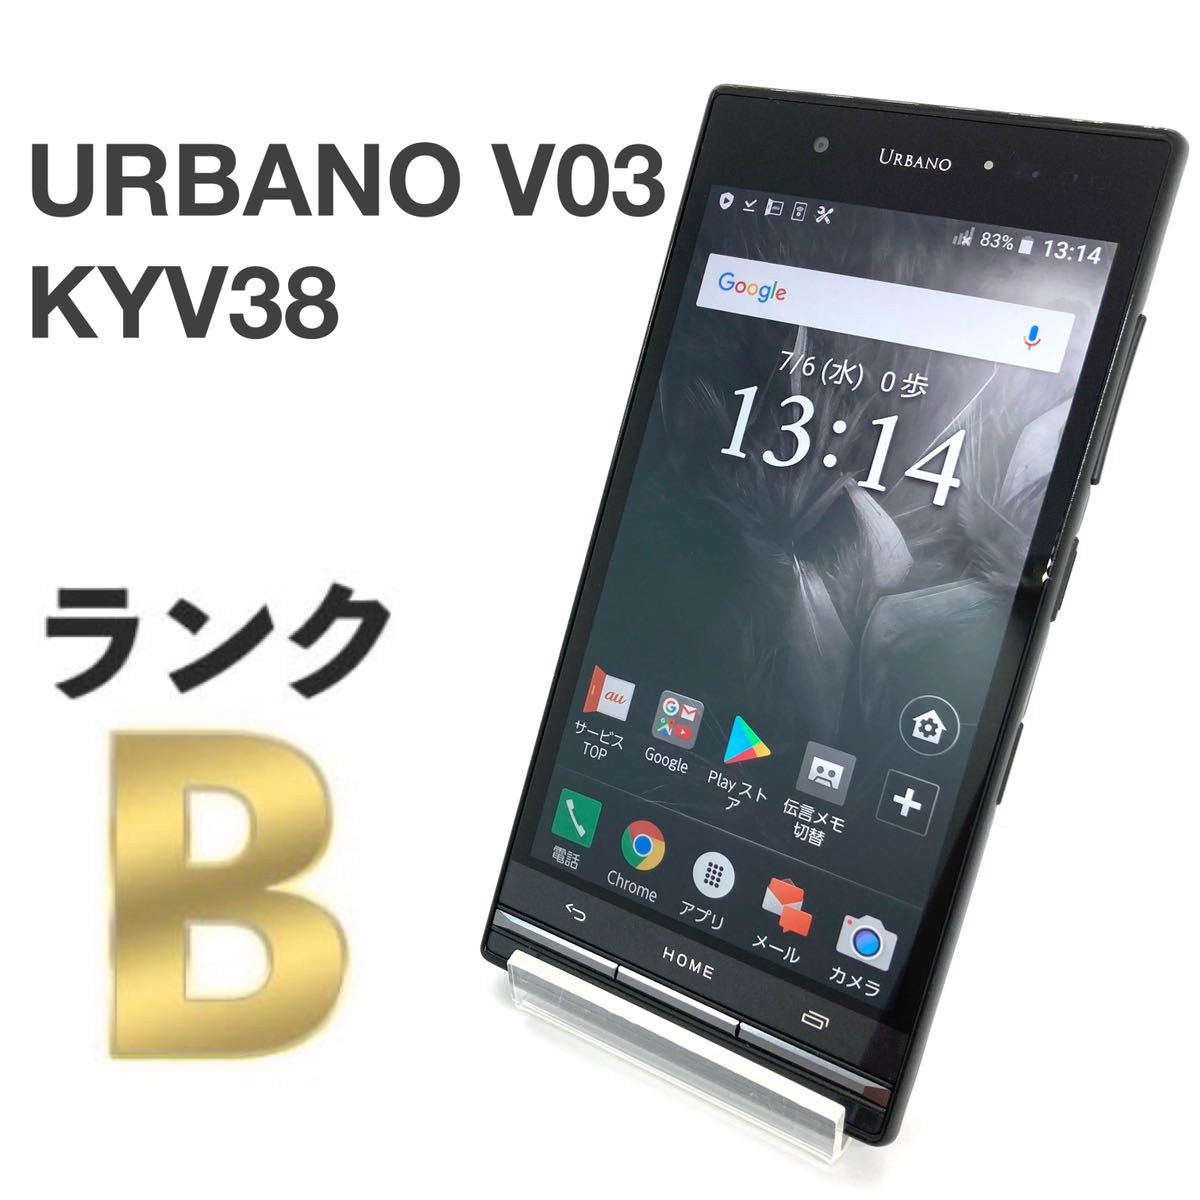 KYV38 アルバーノ Android